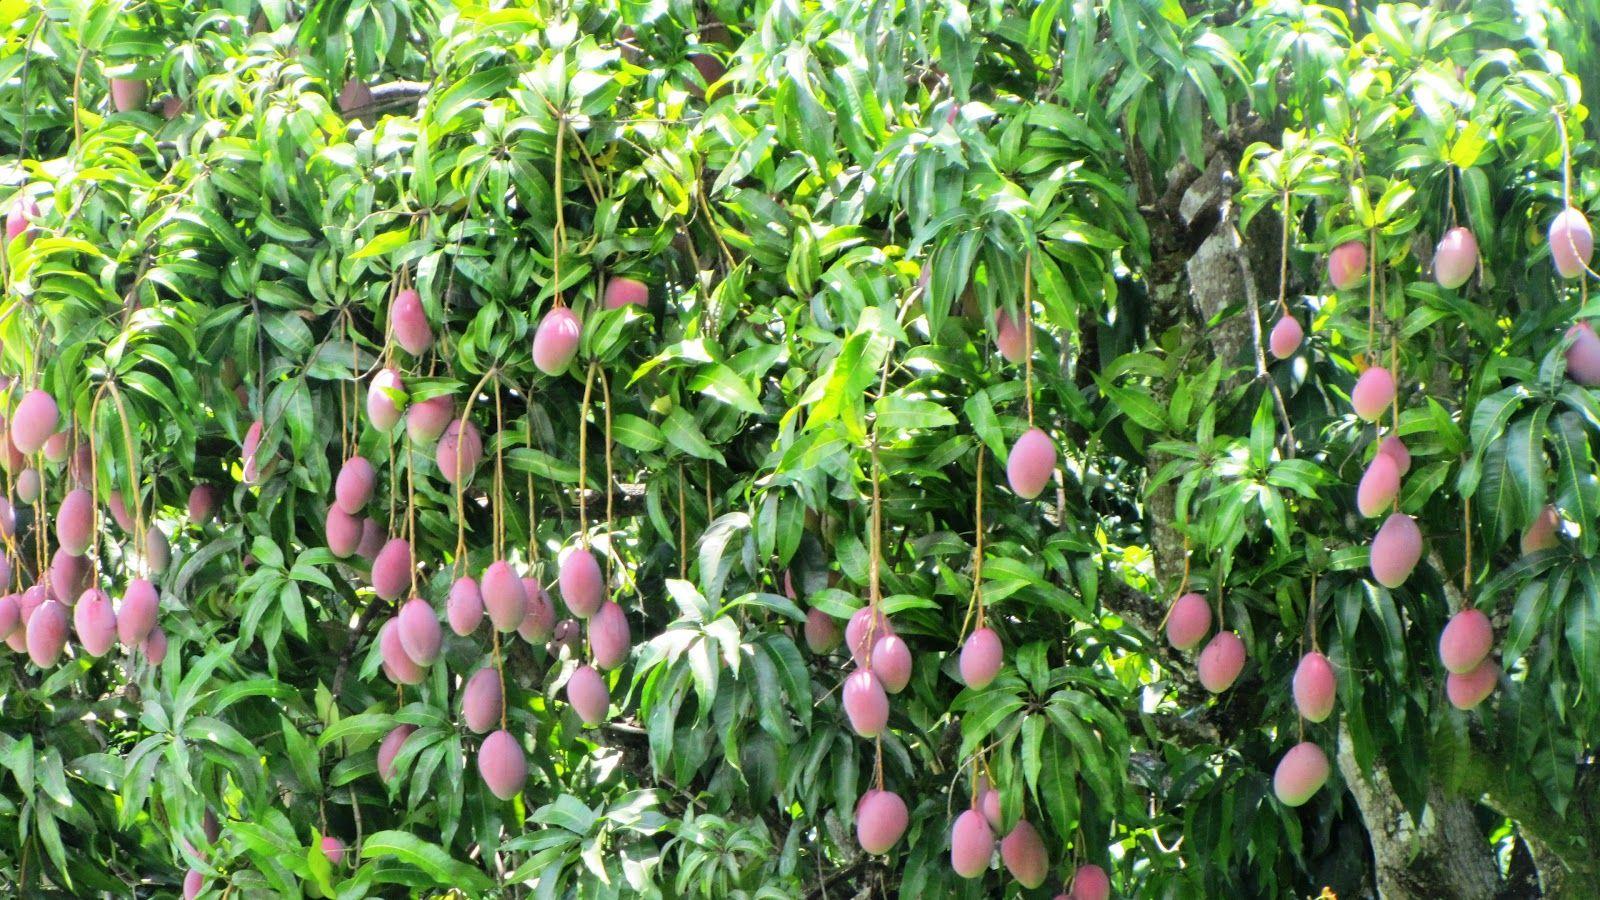 Hd Image Of Mango Trees